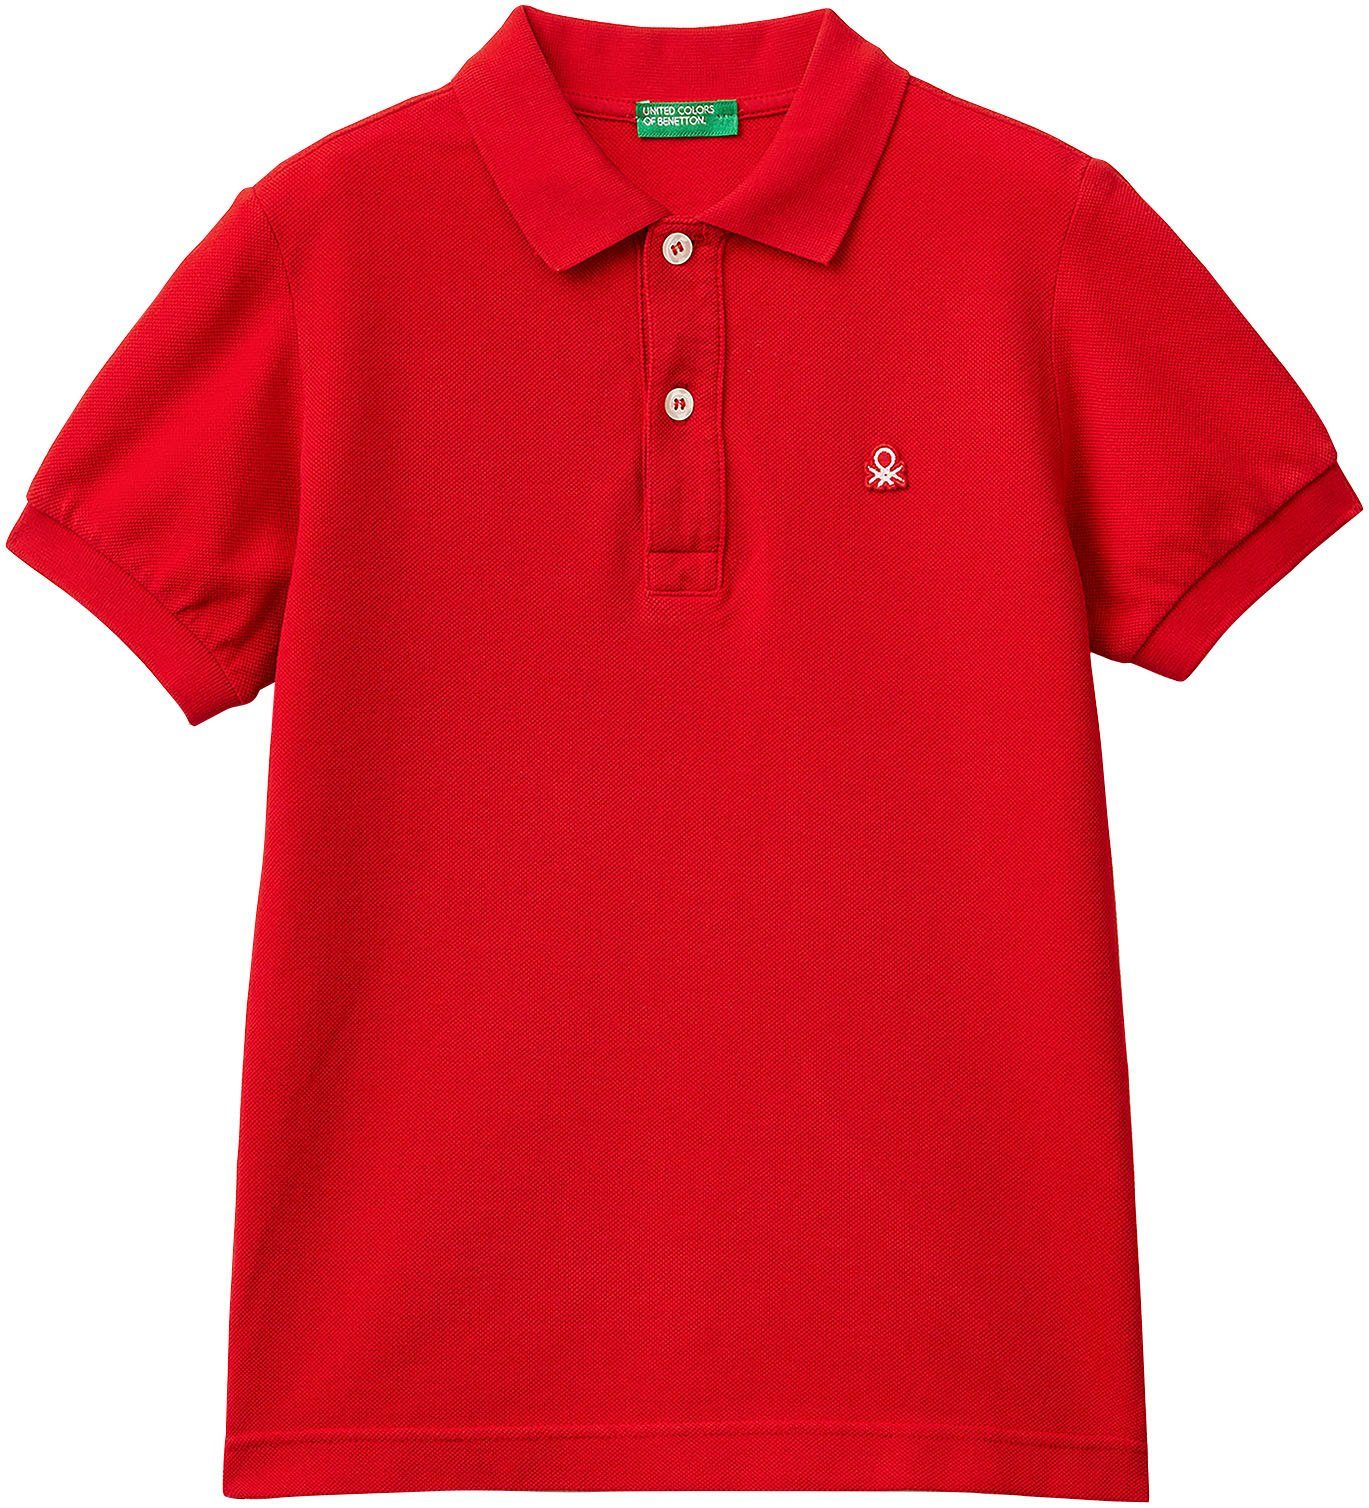 United Colors of Benetton Poloshirt mit Markenlabel | Poloshirts